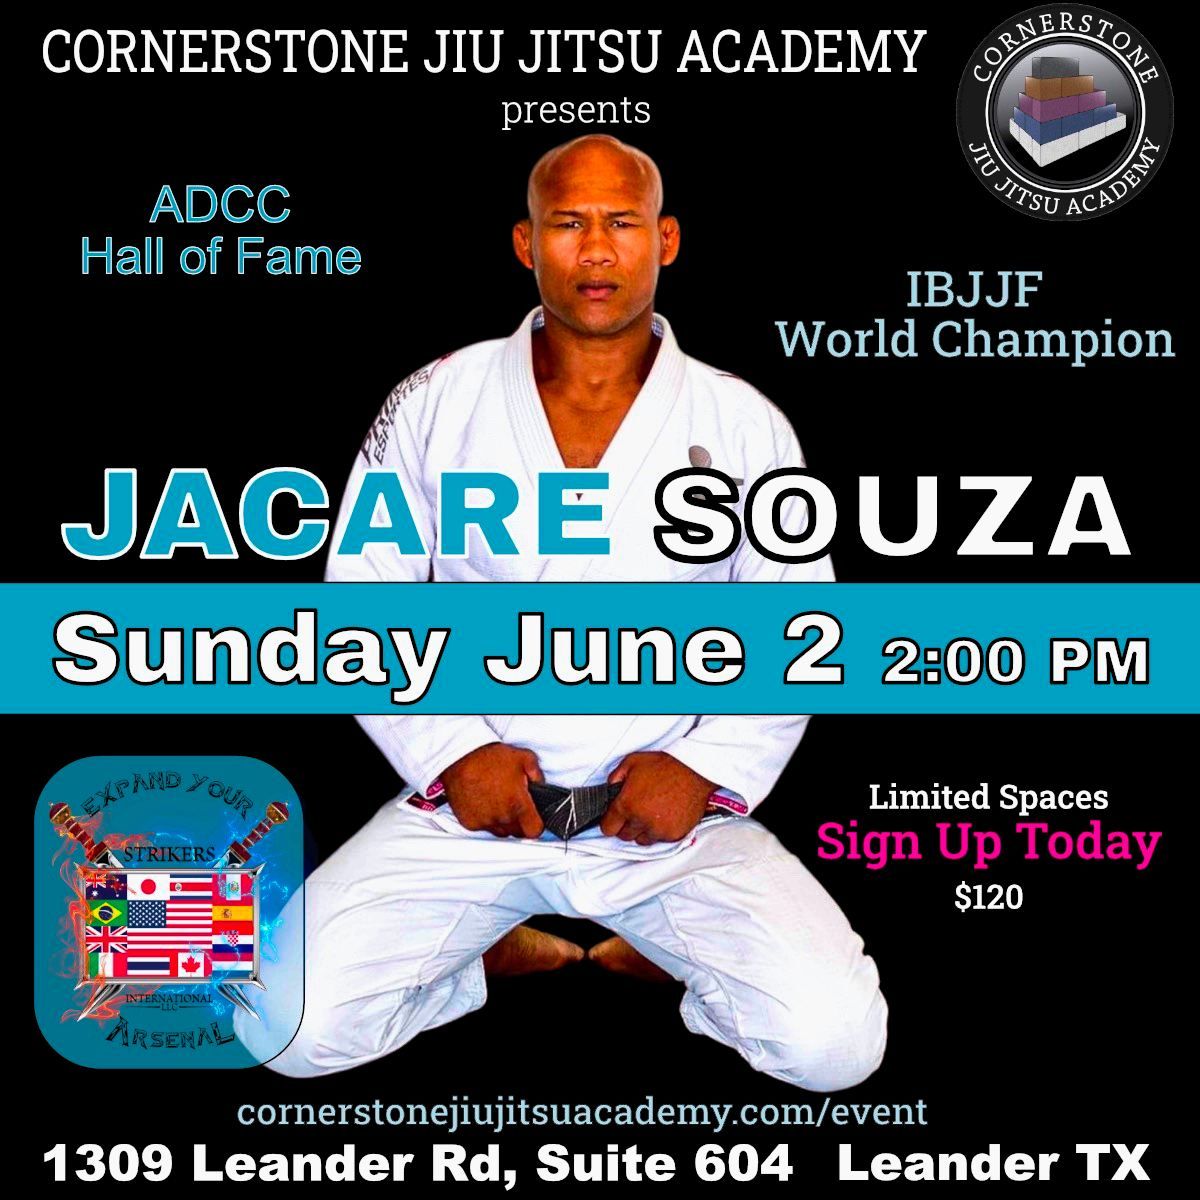 Jacare Gi Seminar @ Cornerstone Jiu Jitsu Academy